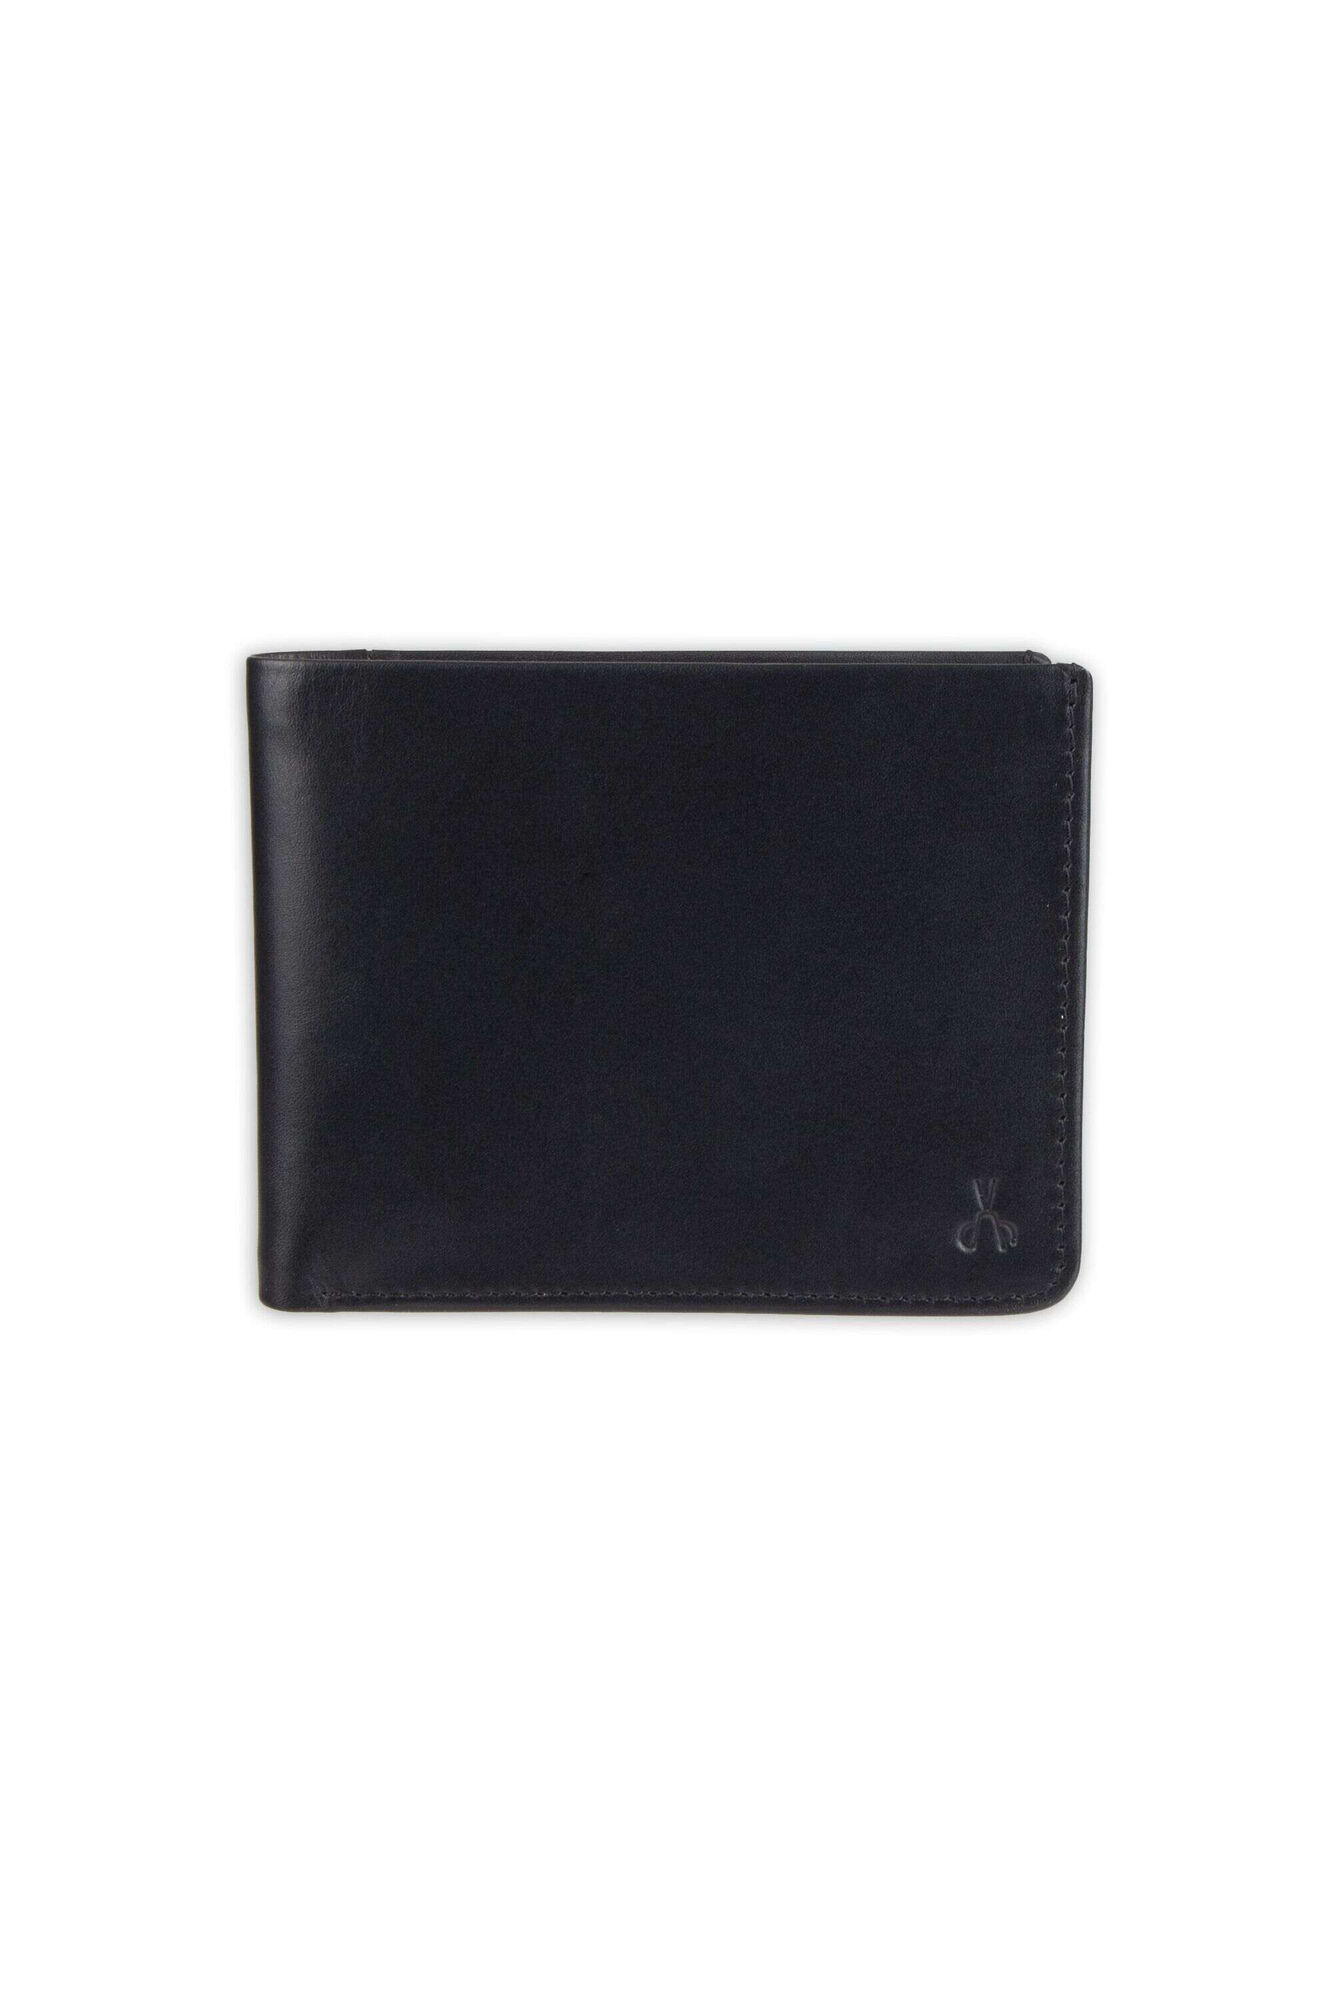 Haggar Rfid Extra Capacity Slimfold Wallet - Best Dad Ever Emboss Black (31DN130015) photo